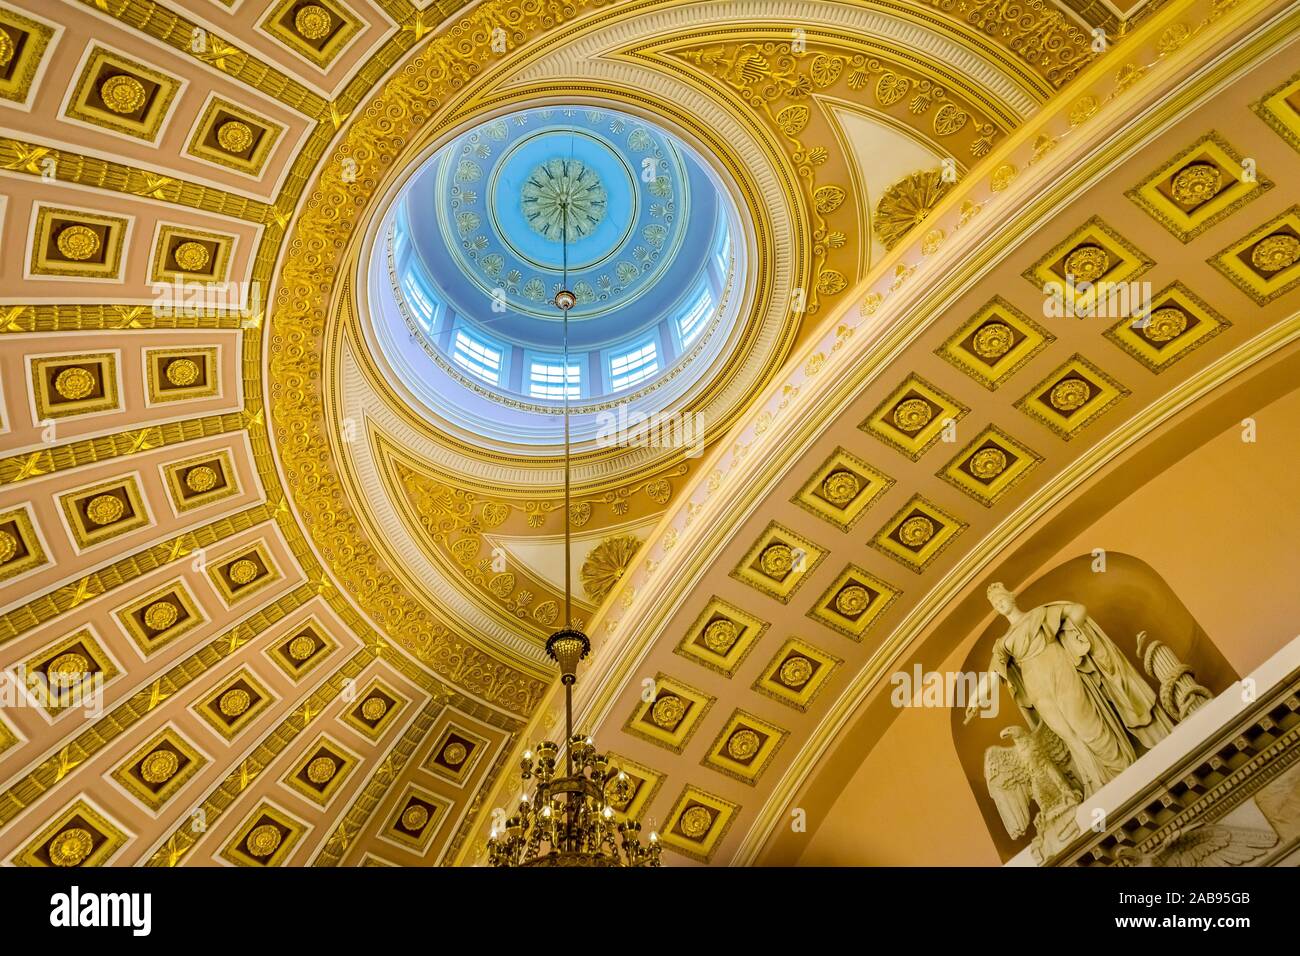 Liberty Eagle Plaster Ceiling Dome National Statutory Hall US Capitol Washington DC. Old Hall House of Representatives. Stock Photo